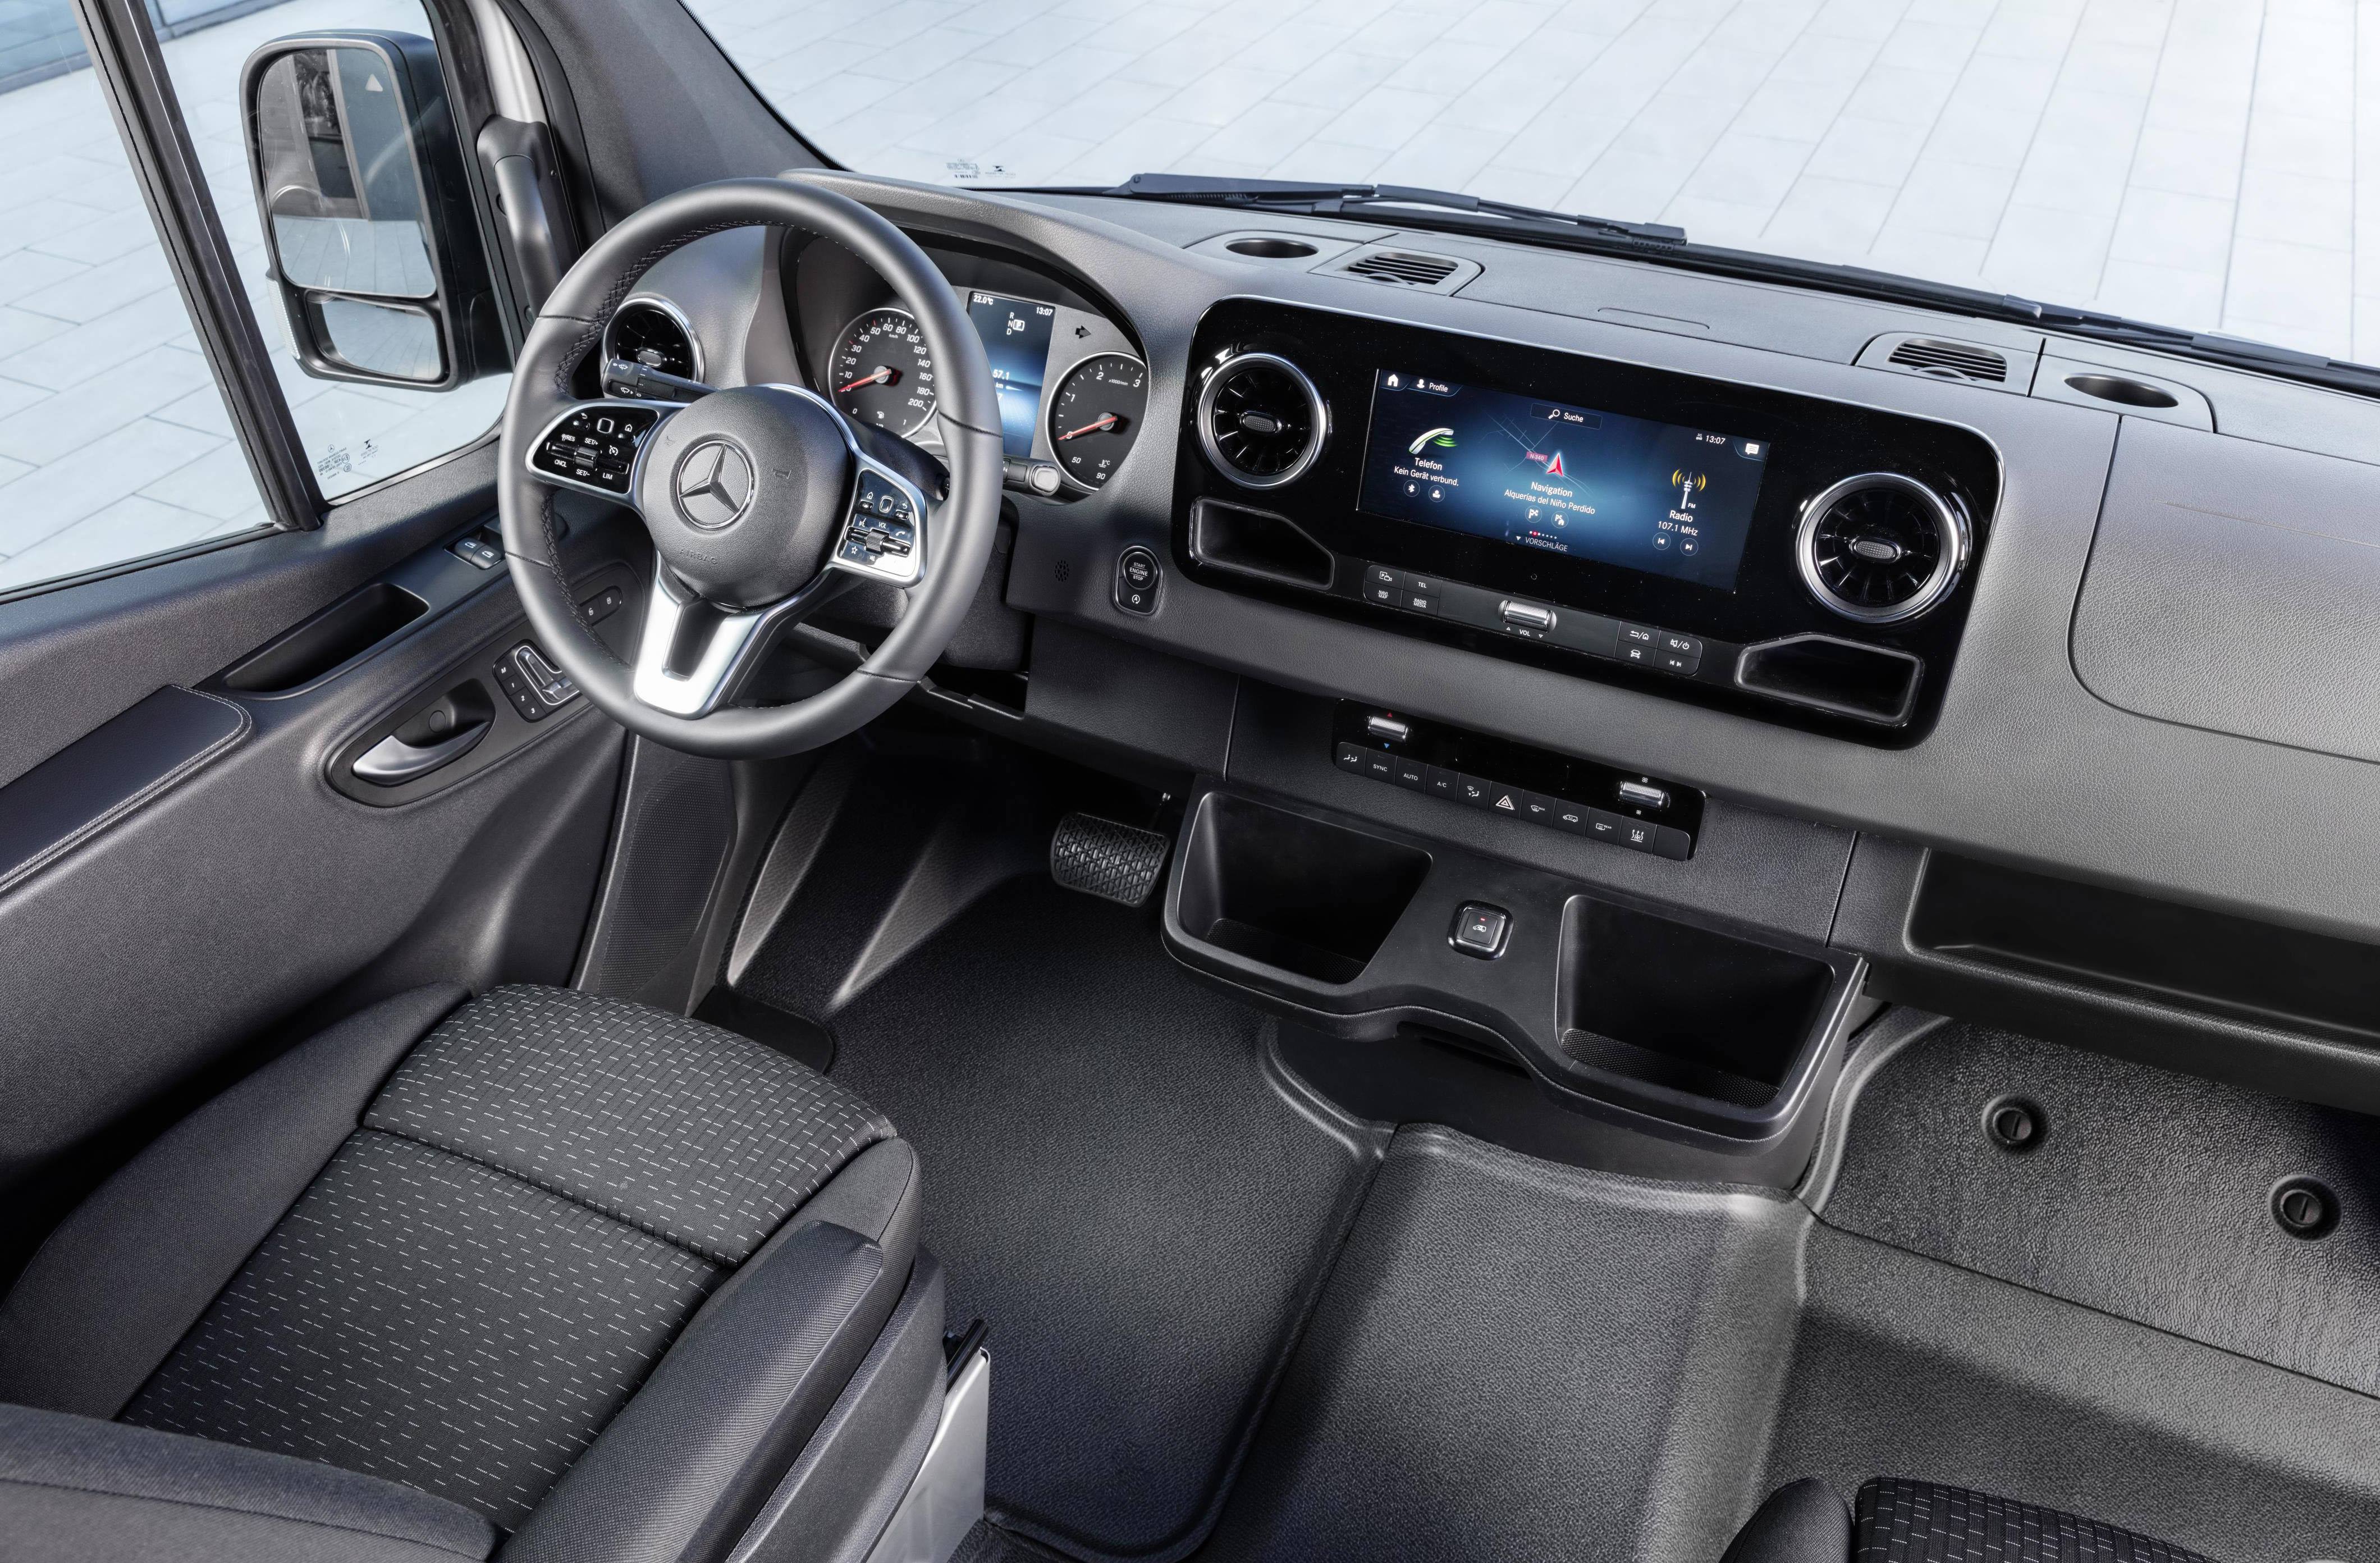 Mercedes-Benz Sprinter interior